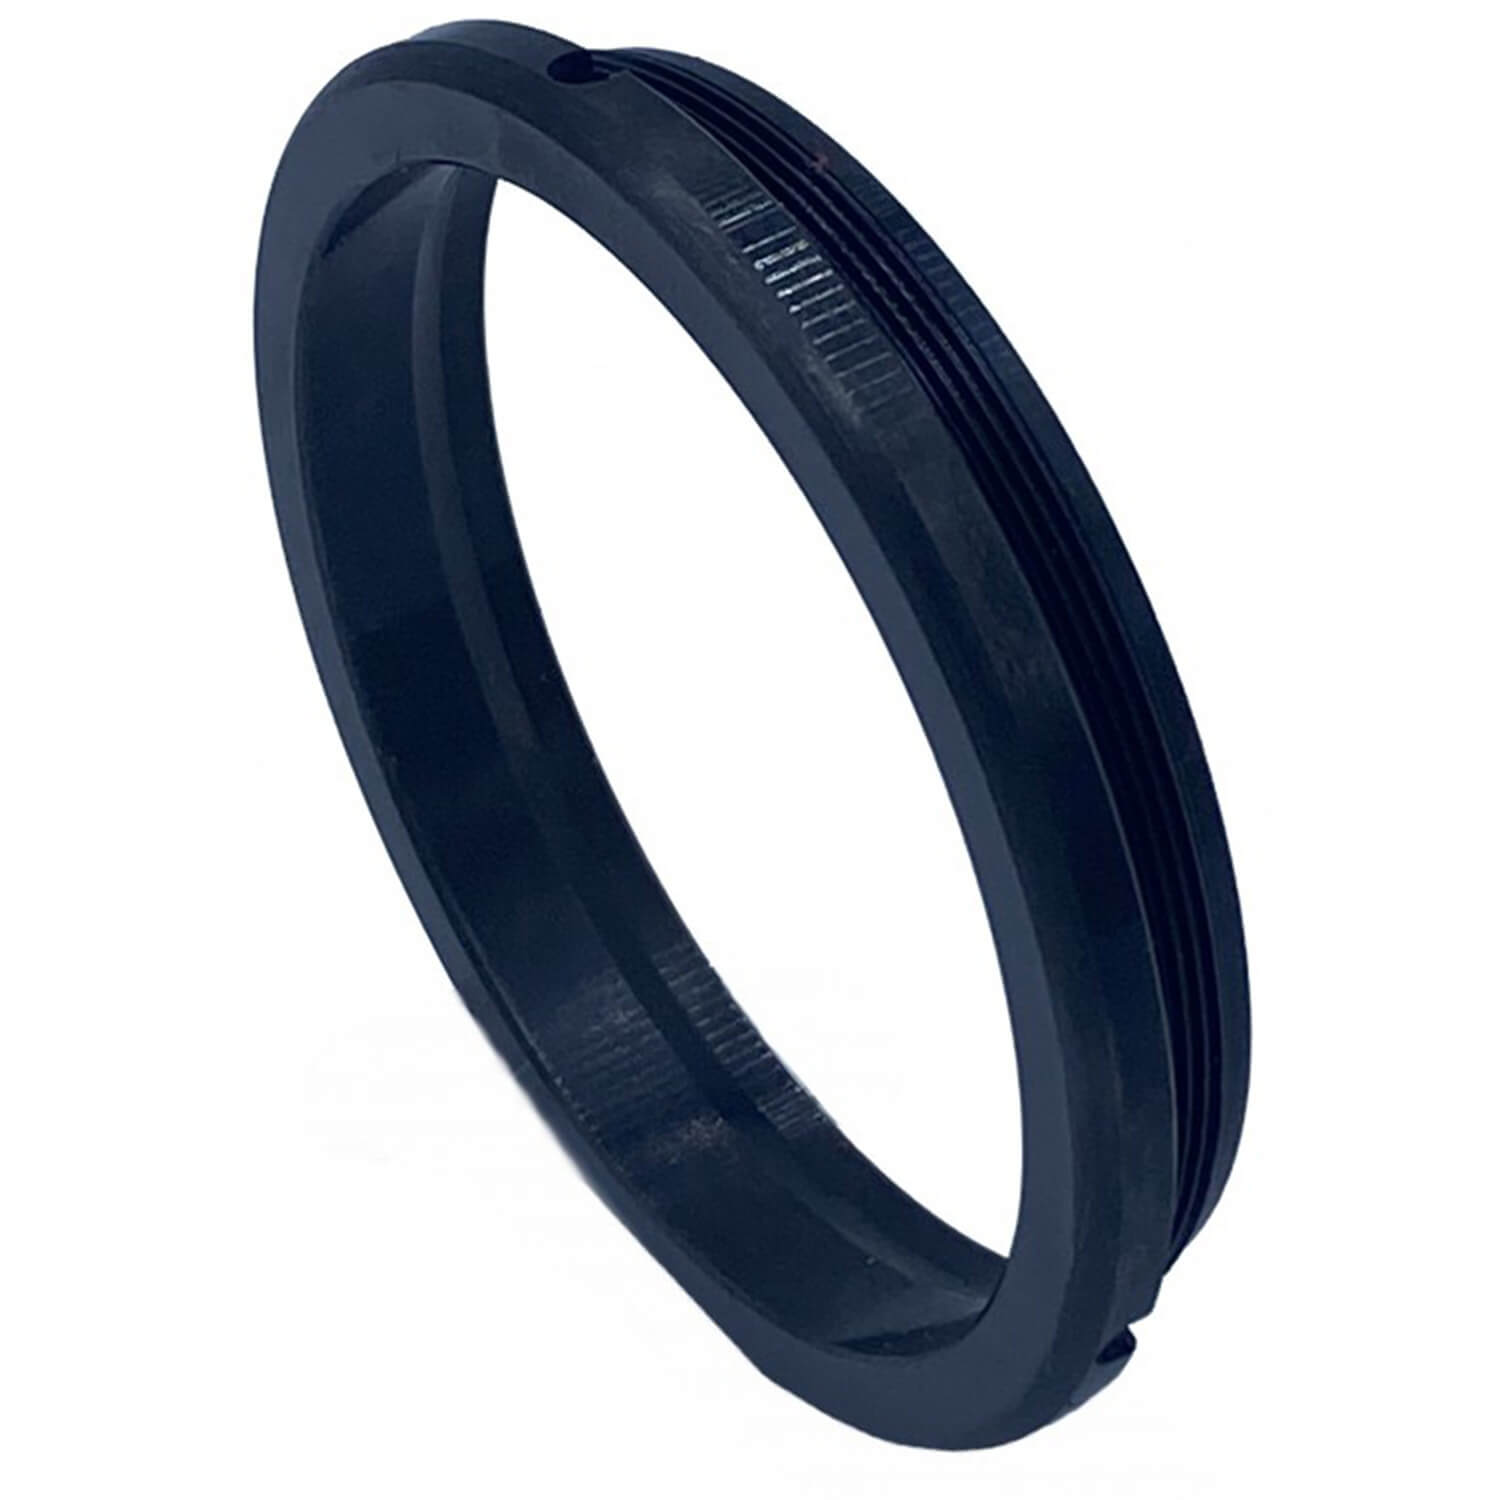 Smartclip ring - Optics Accessories